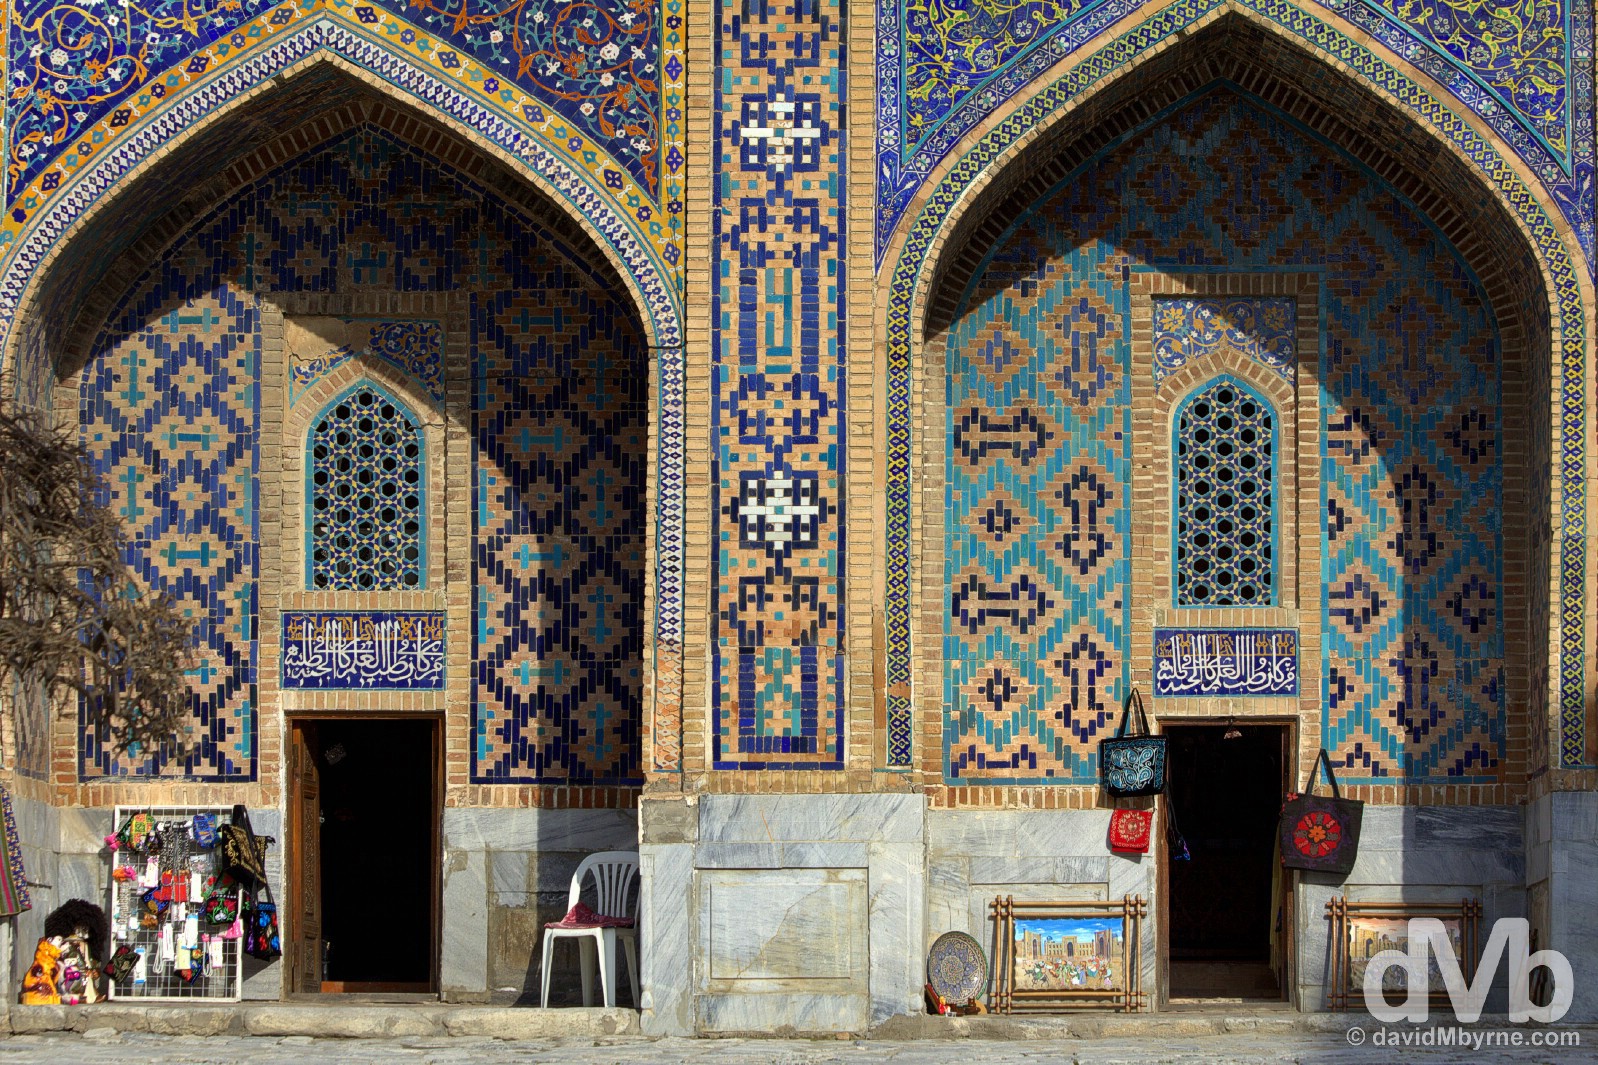 Souvenirs for sale in the courtyard of the Tilla-Kari Medressa of the Registan in Samarkand, Uzbekistan. March 8, 2015. 